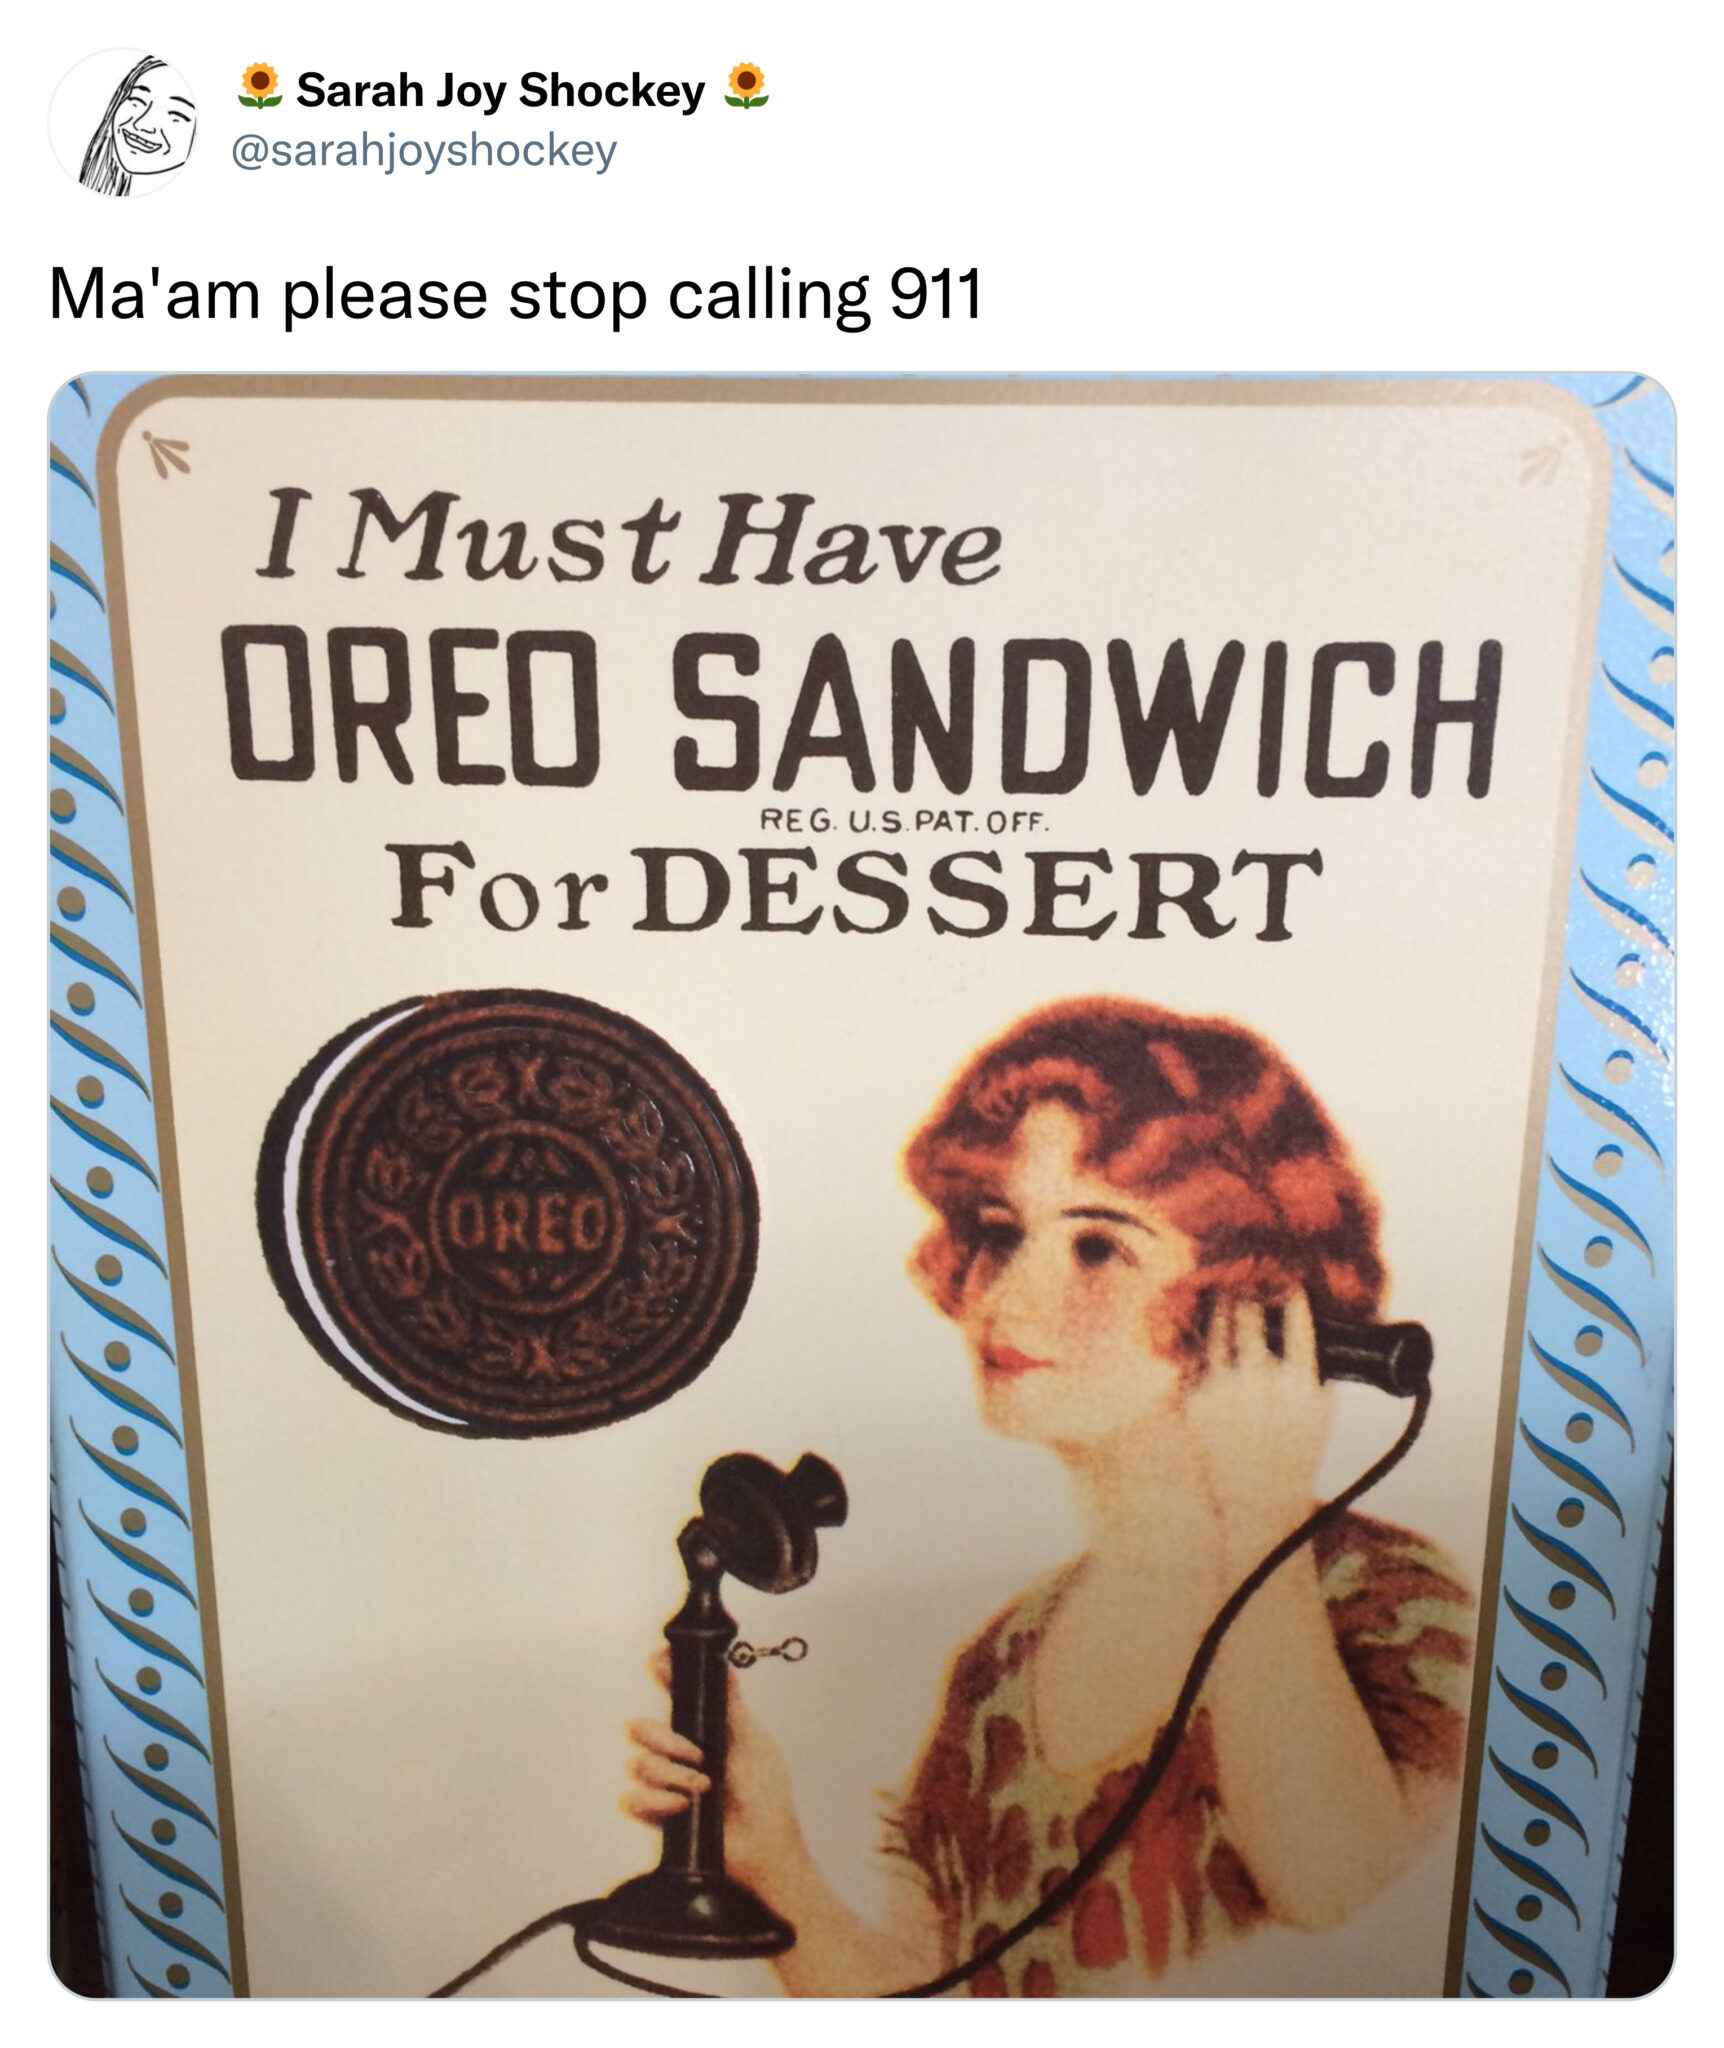 best of twitter - food in 1912 england - Sarah Joy Shockey Ma'am please stop calling 911 ddddddd I Must Have Ored Sandwich Reg. U.S. Pat. Off. For Dessert Oreo M I S S S S S S S sssssss